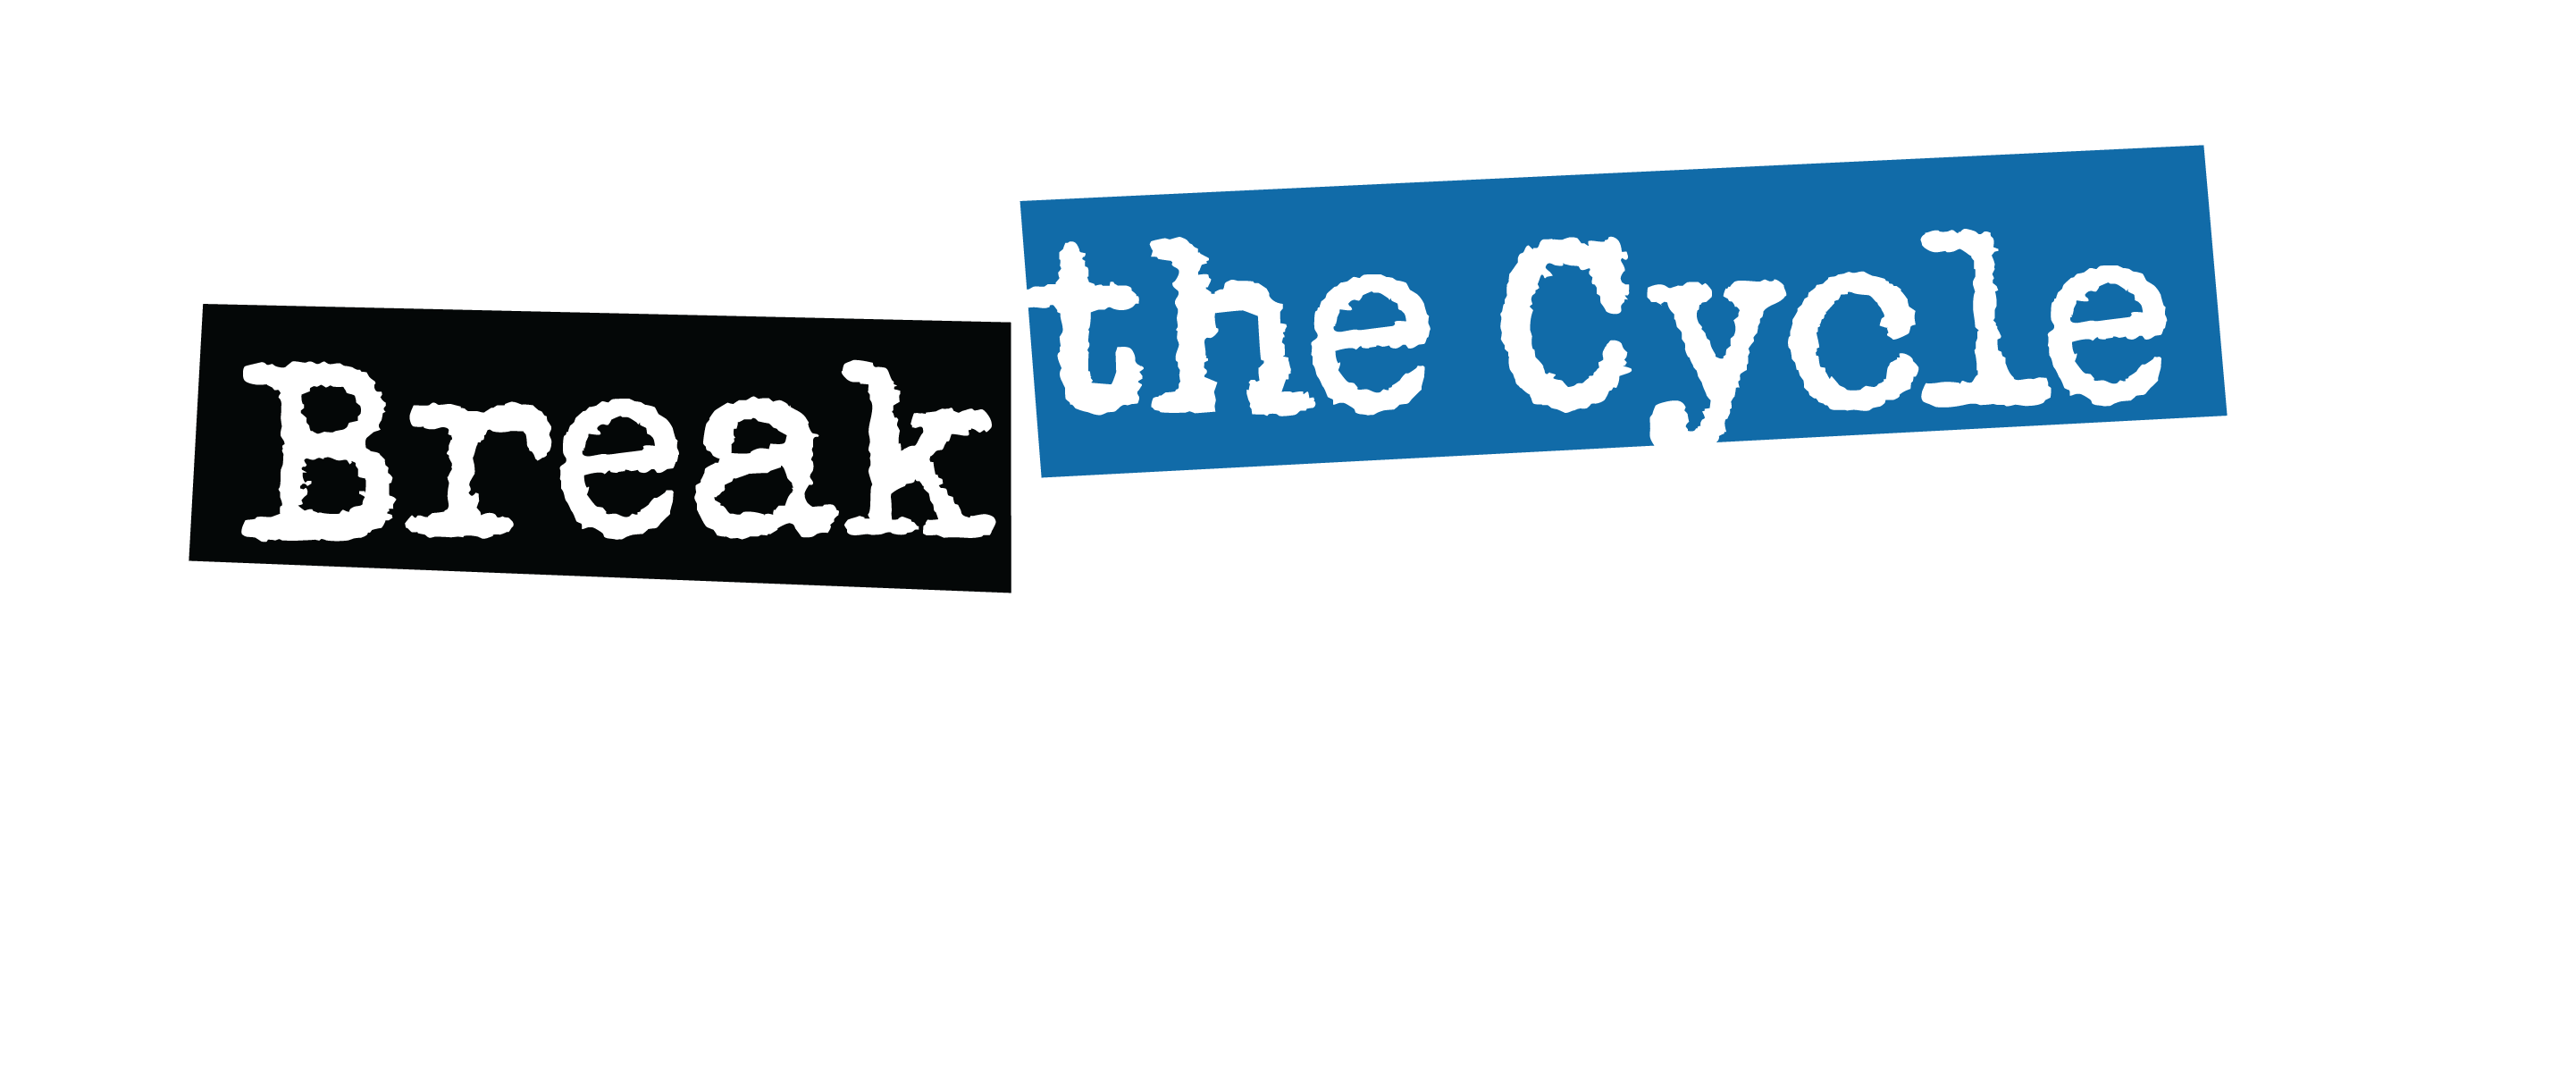 Break Logo - BREAK THE CYCLE LOGO